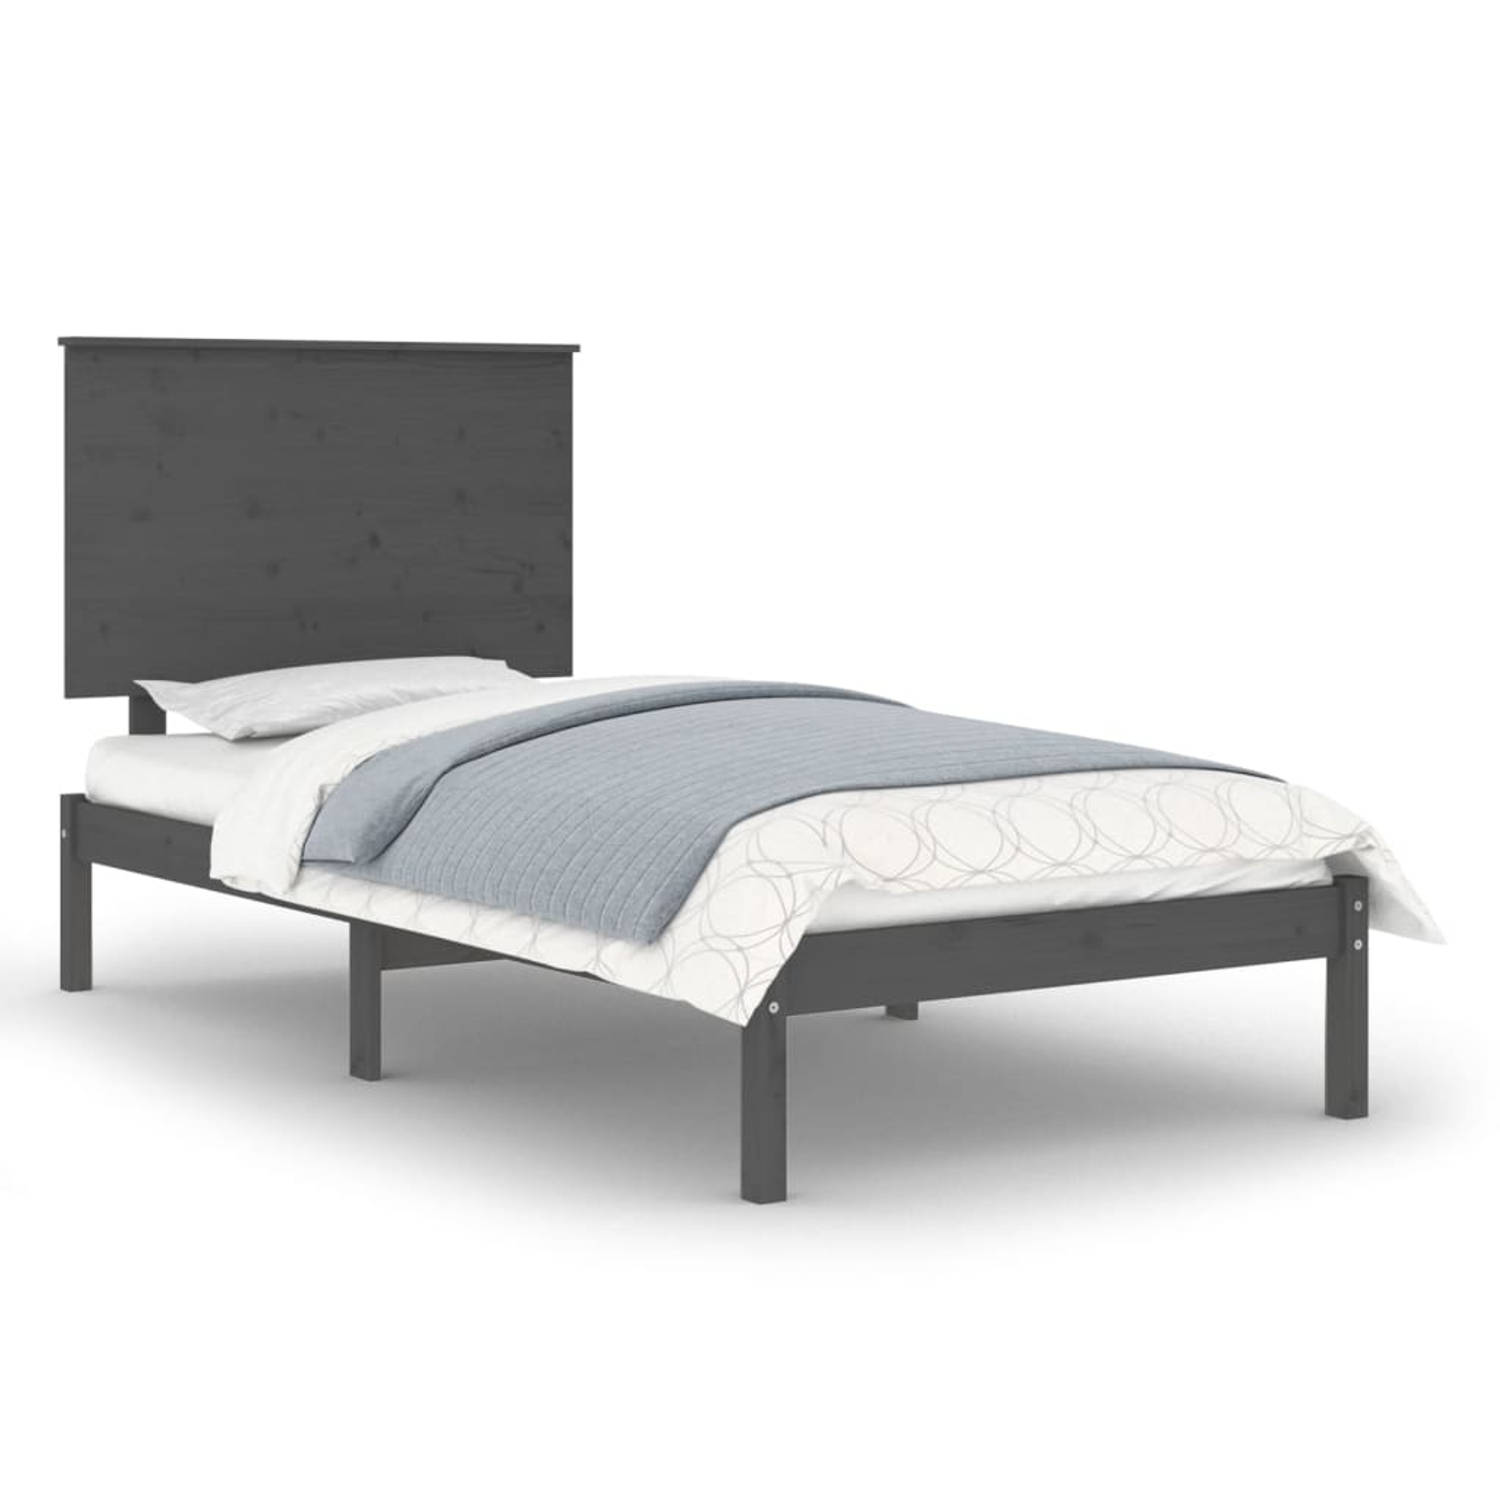 The Living Store Bedframe massief grenenhout grijs 90x200 cm - Bedframe - Bedframes - Bed - Bedbodem - Ledikant - Bed Frame - Massief Houten Bedframe - Slaapmeubel - Eenpersoonsbed